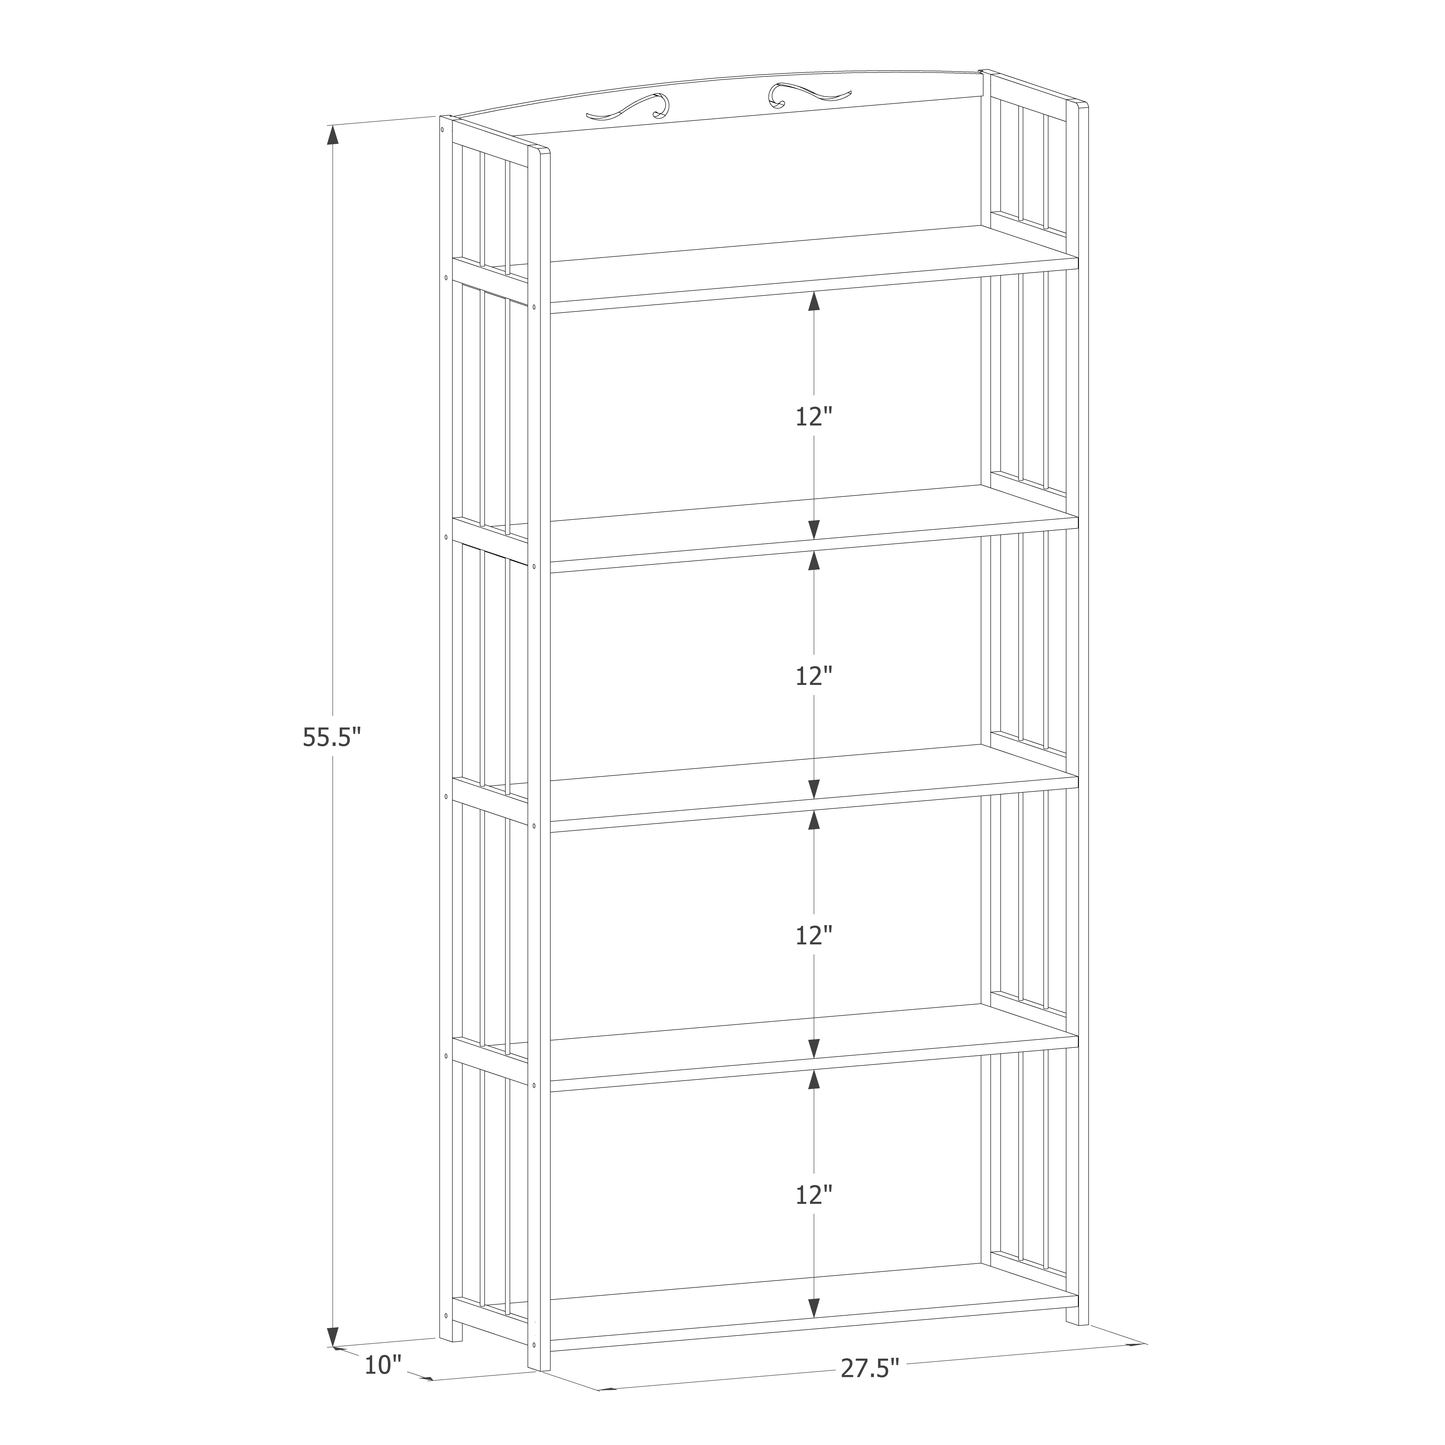 Adjustable Multi-Functional Shelving Organizer - Enclosed Back Panel - 5 Tier - Natural